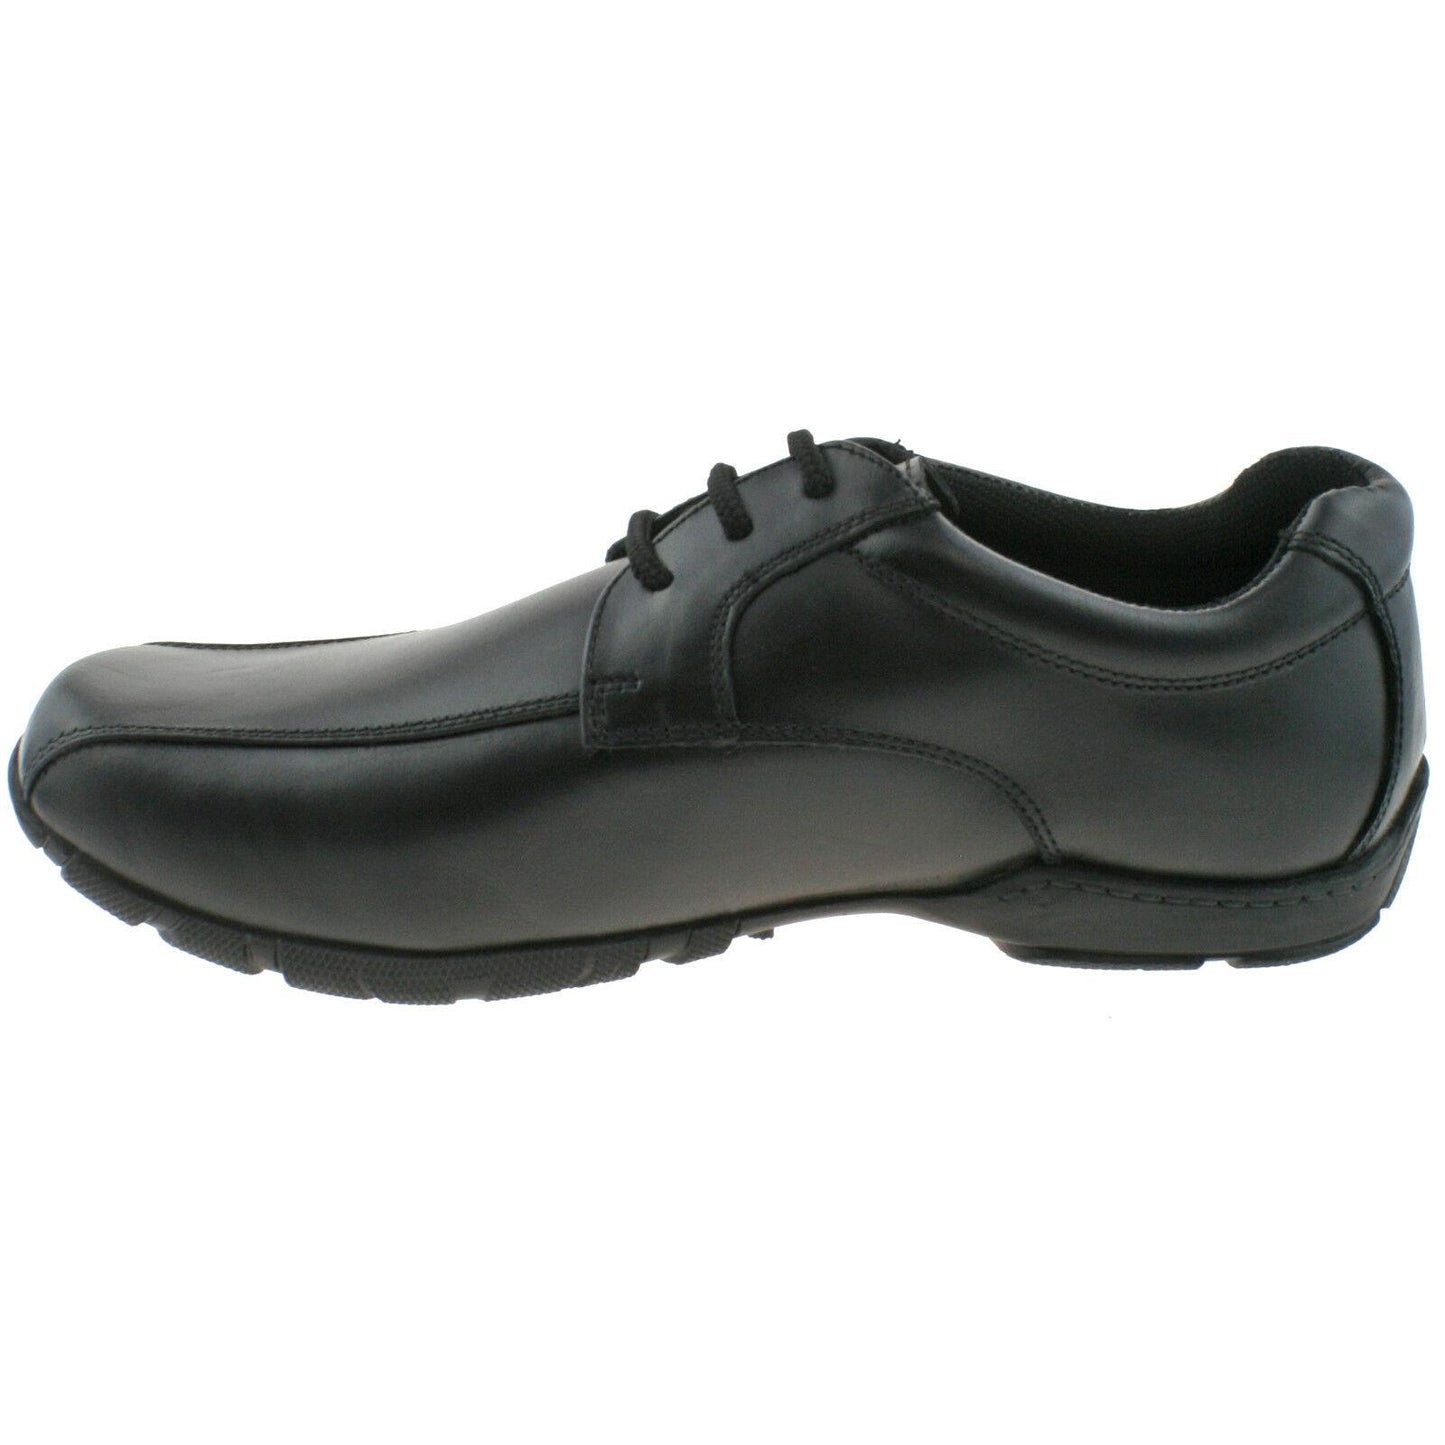 Boys Hush Puppies Vincente Snr Black Leather Lace Up School Shoes